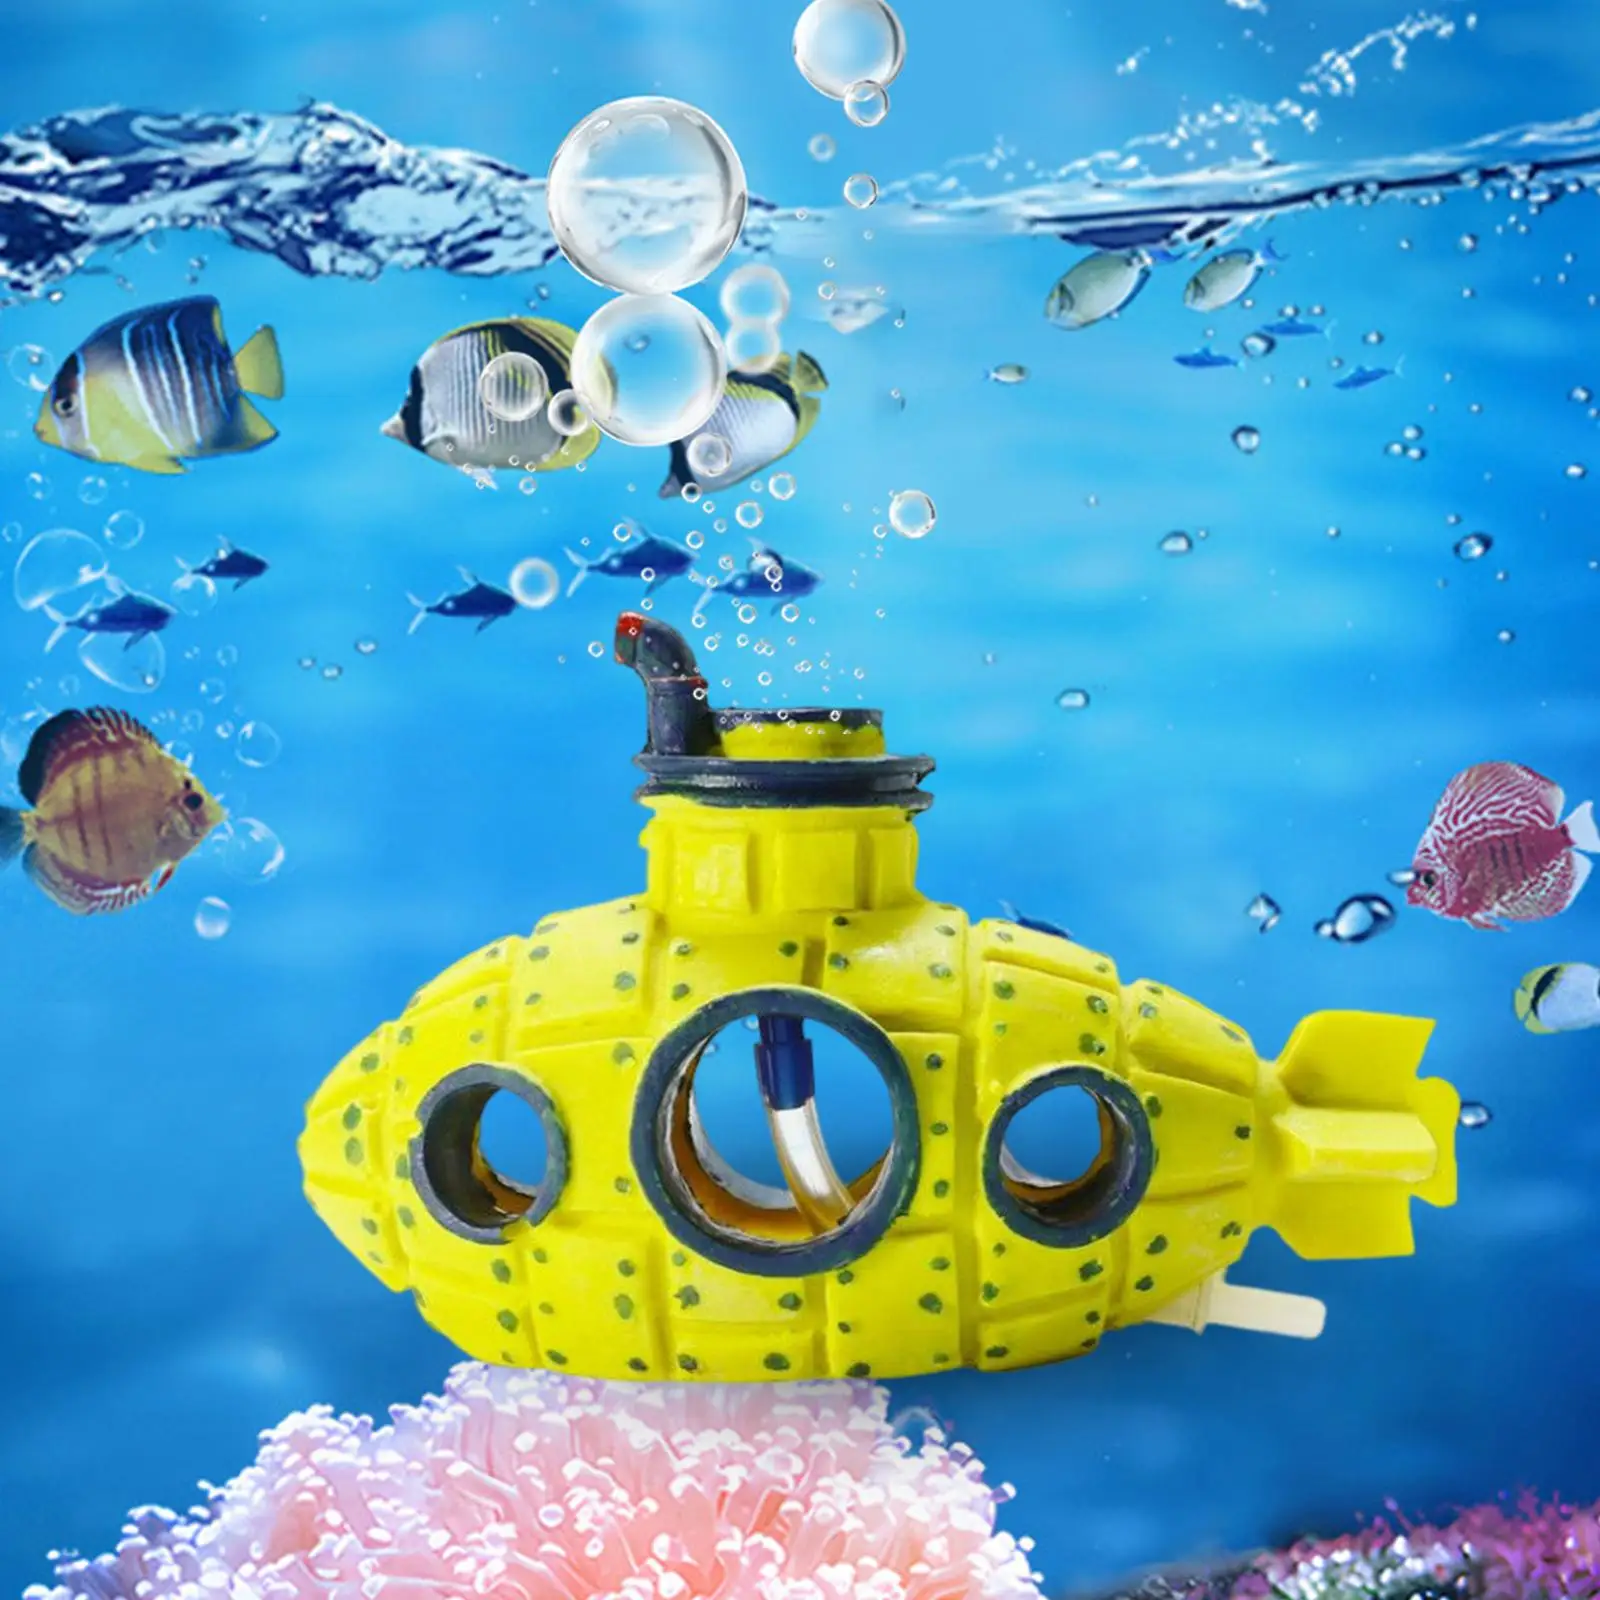 Aquarium Ornaments Submarine Model Creative Crafts Fish Hideout House Fish Tank